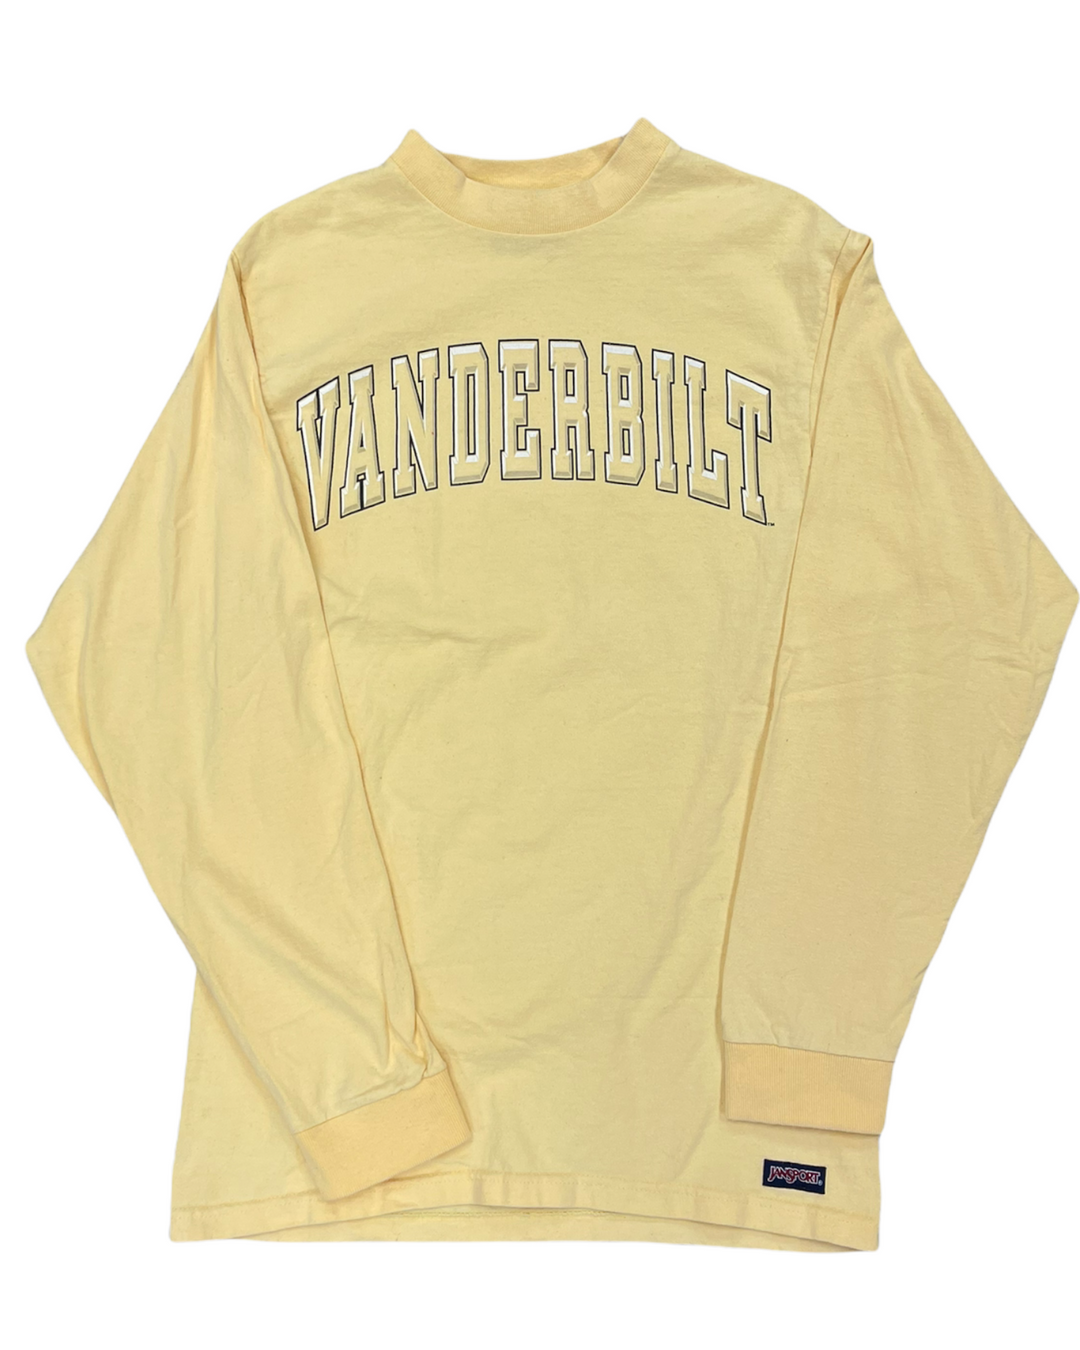 Vanderbilt Vintage Long Sleeve